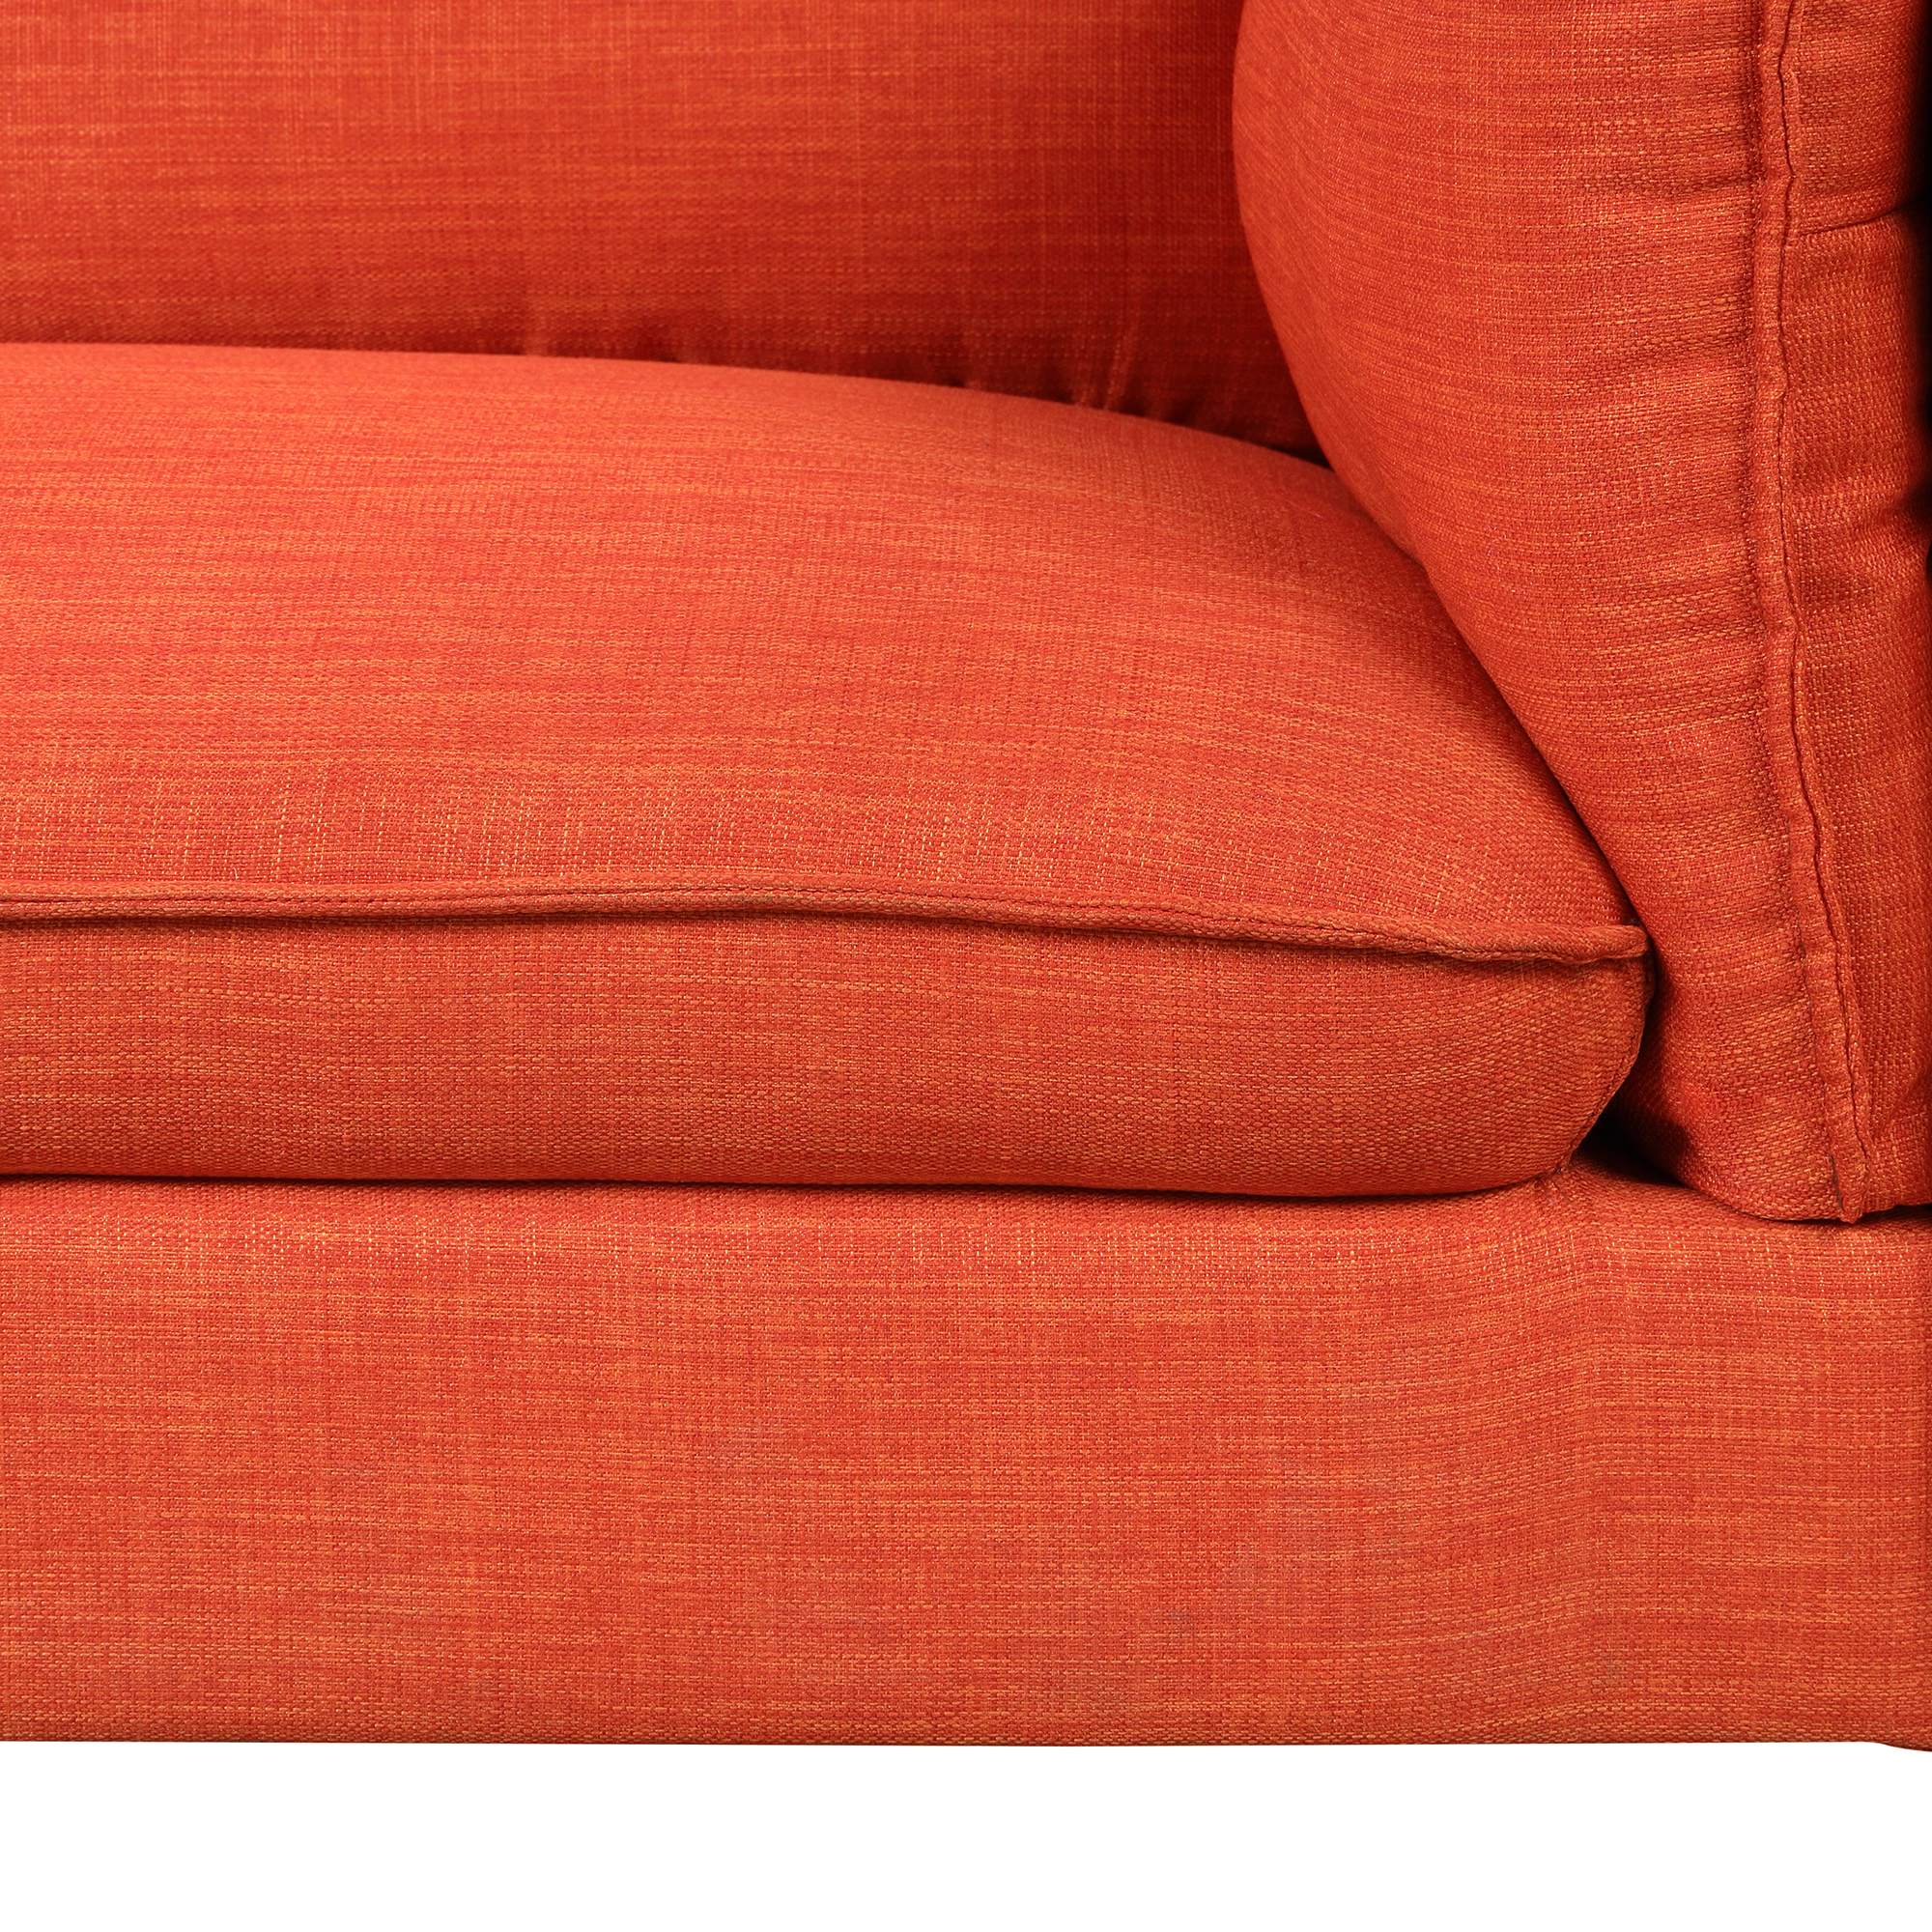 Linen Fabric Upholstered Loveseat, Orange - WF292373AAG